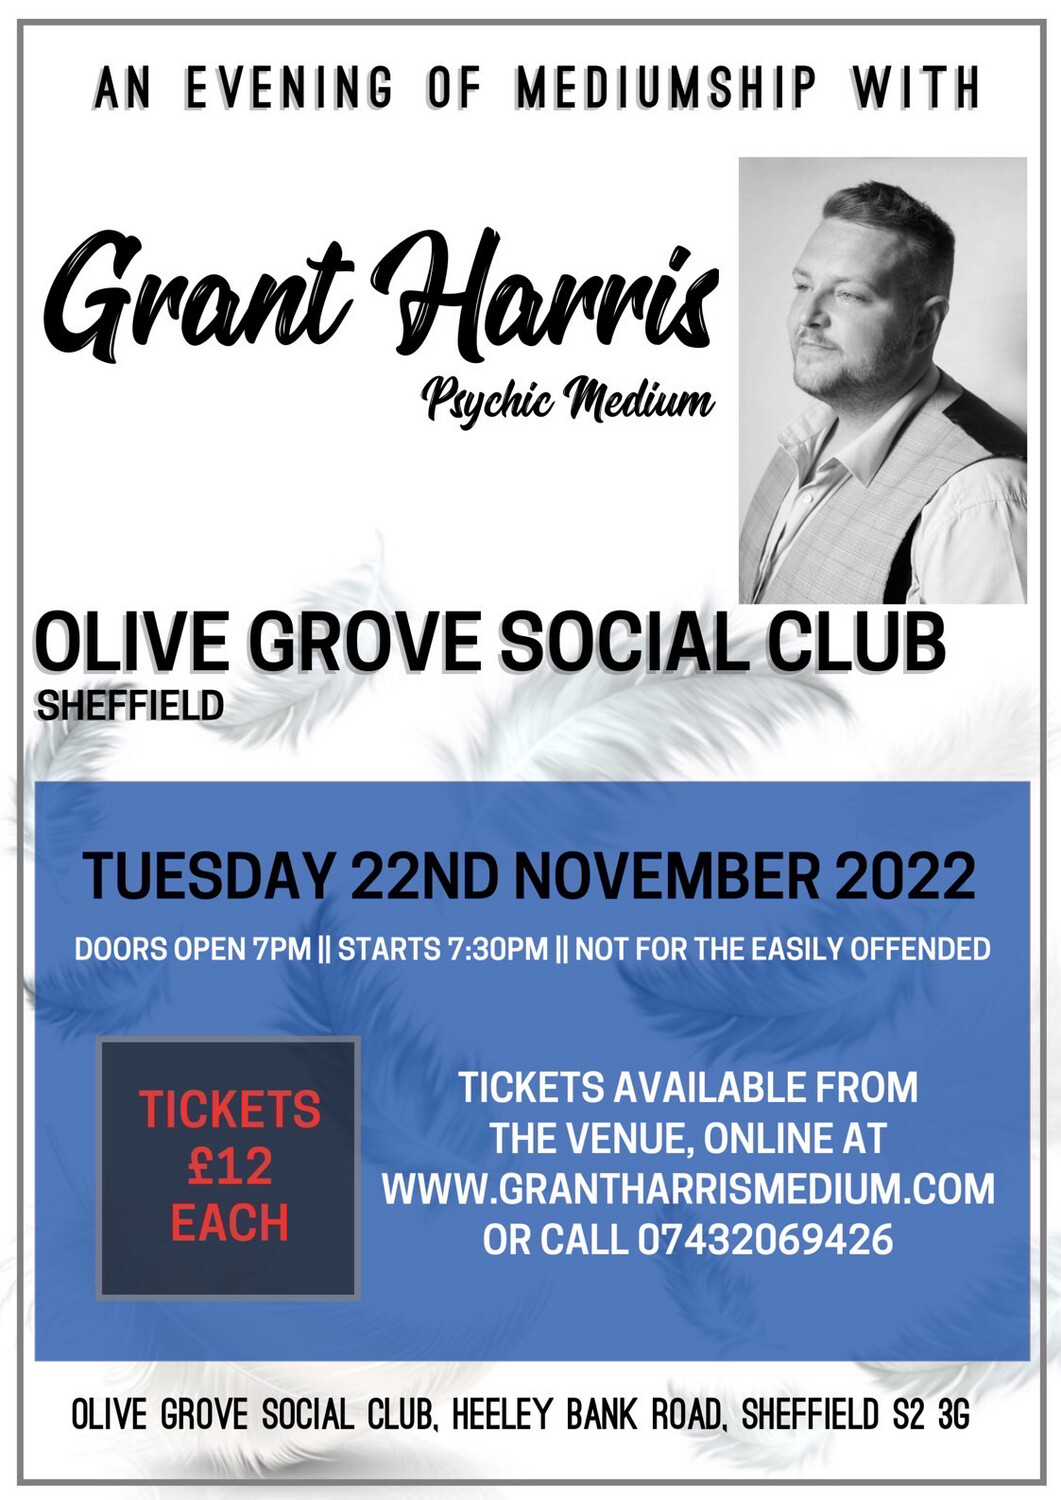 Olive Grove Social Club, Sheffield, Tue 22nd November 2022